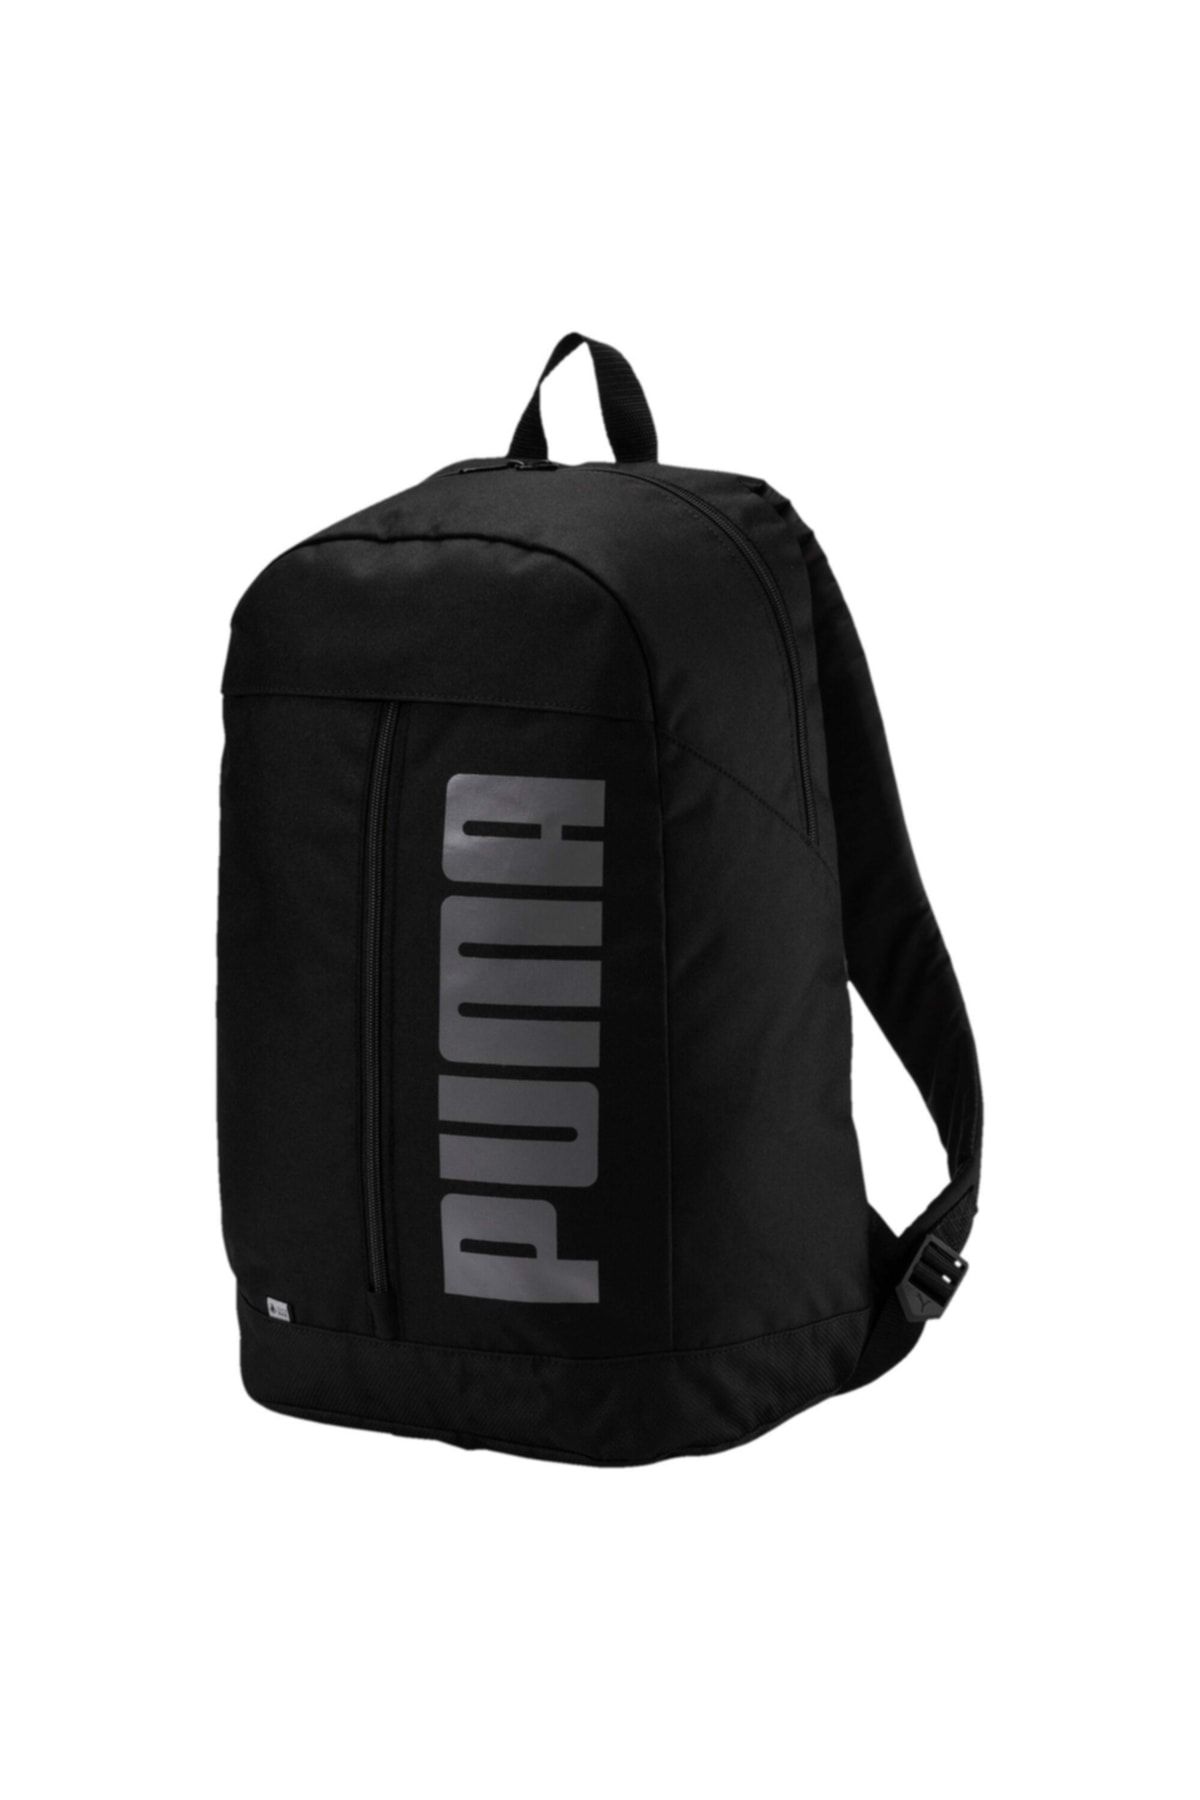 Puma Pioneer Backpack Ii Siyah Unisex Sırt Çantası 100351328